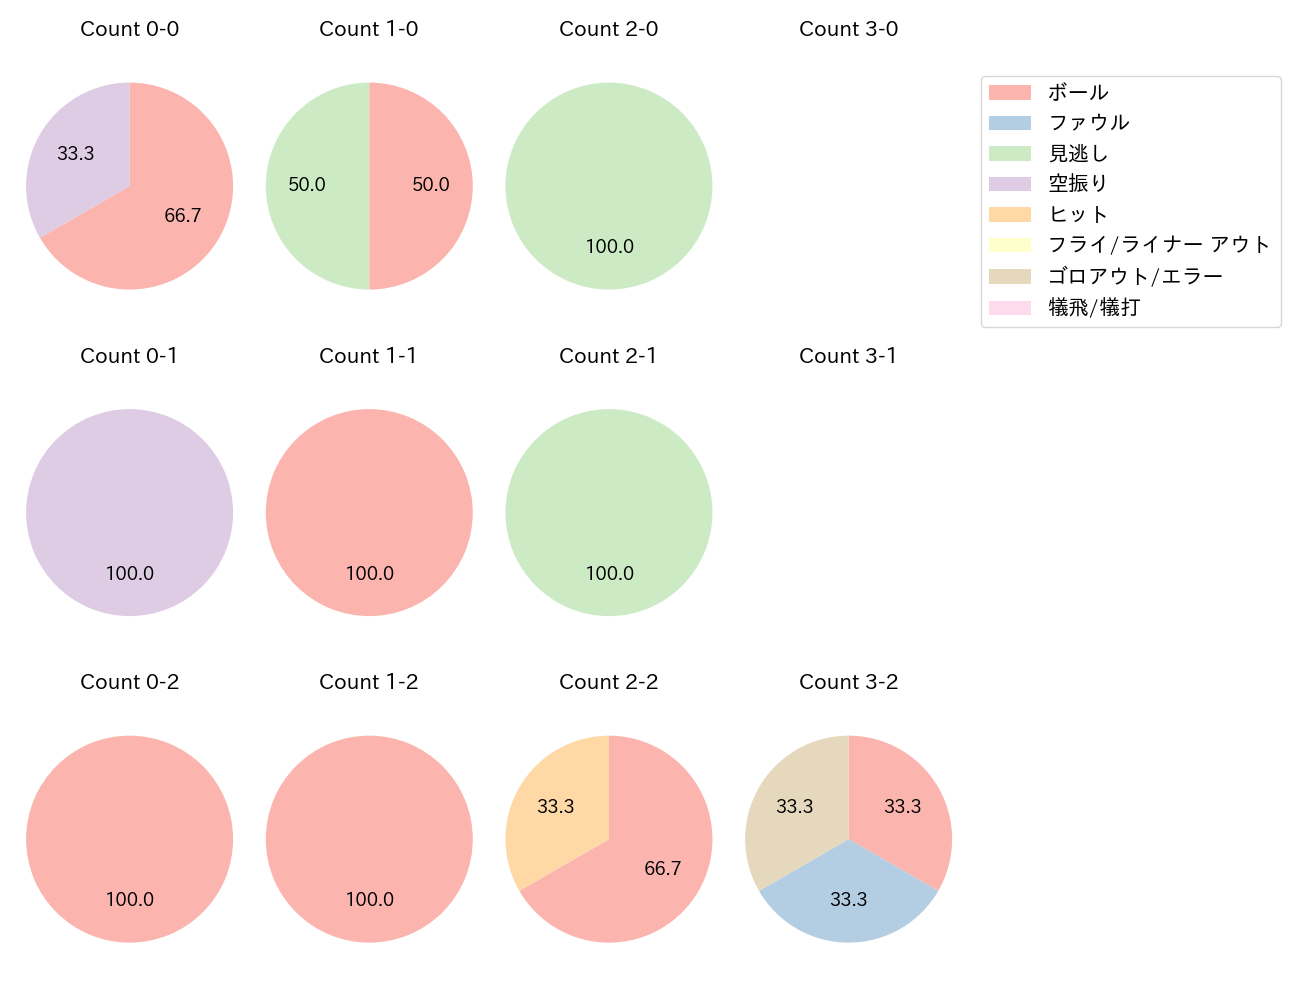 小川 龍成の球数分布(2022年6月)